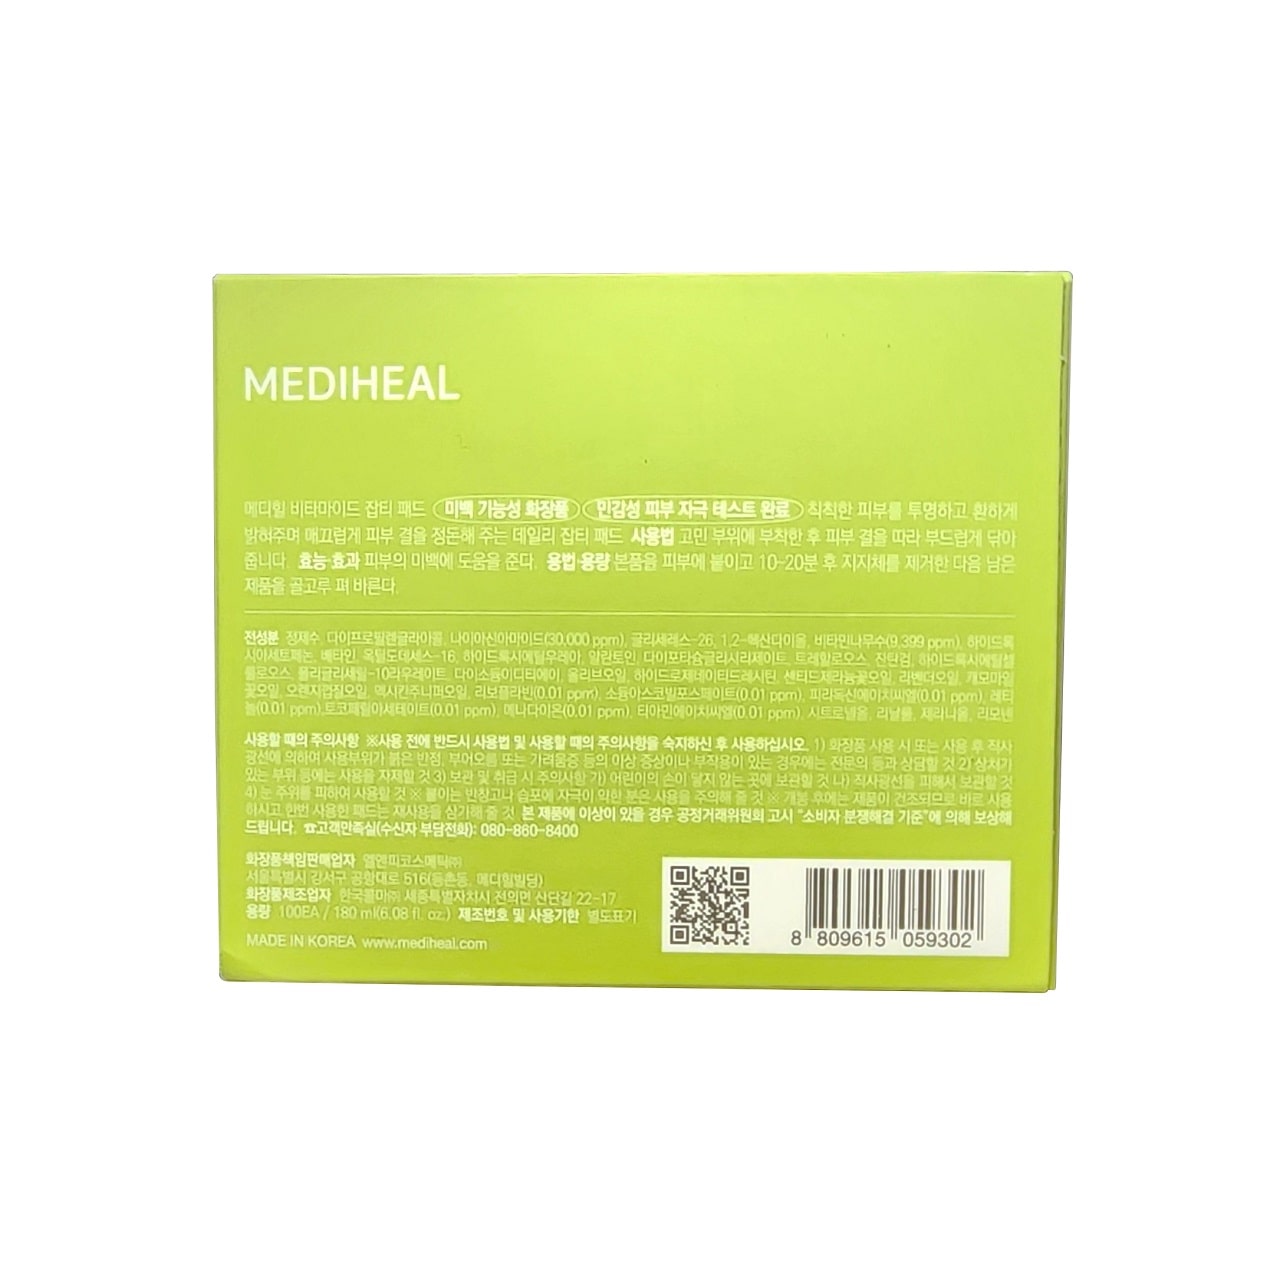 Description, Ingredients, cautions for Mediheal Vitamide Brightening Pads (100 count) in Korean